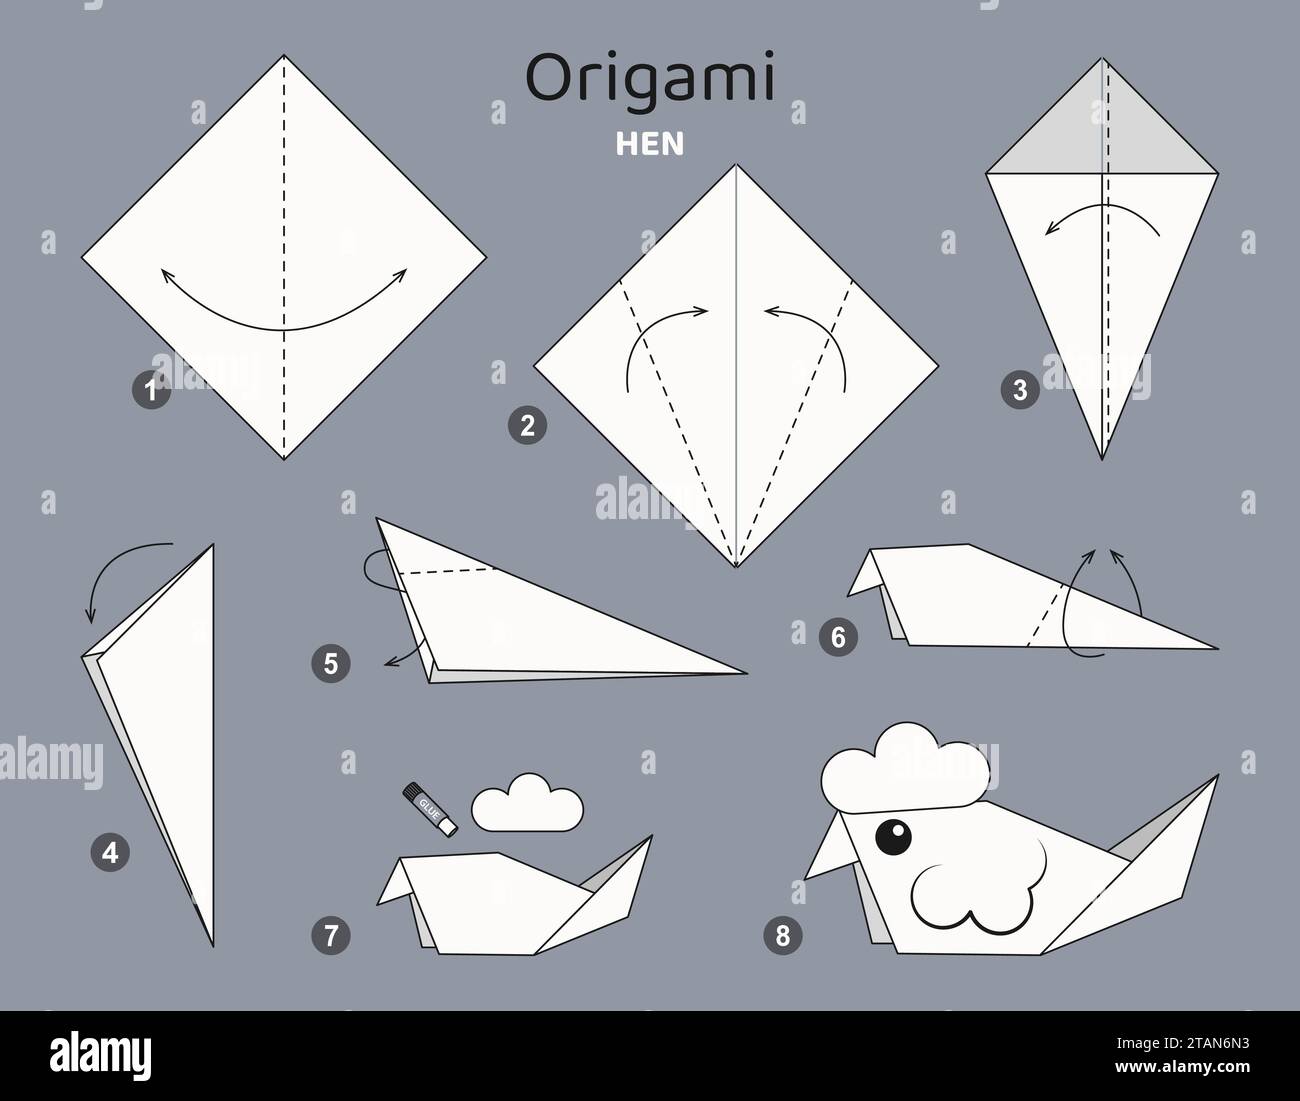 Origami tutorial for kids. Origami cute hen. Stock Vector